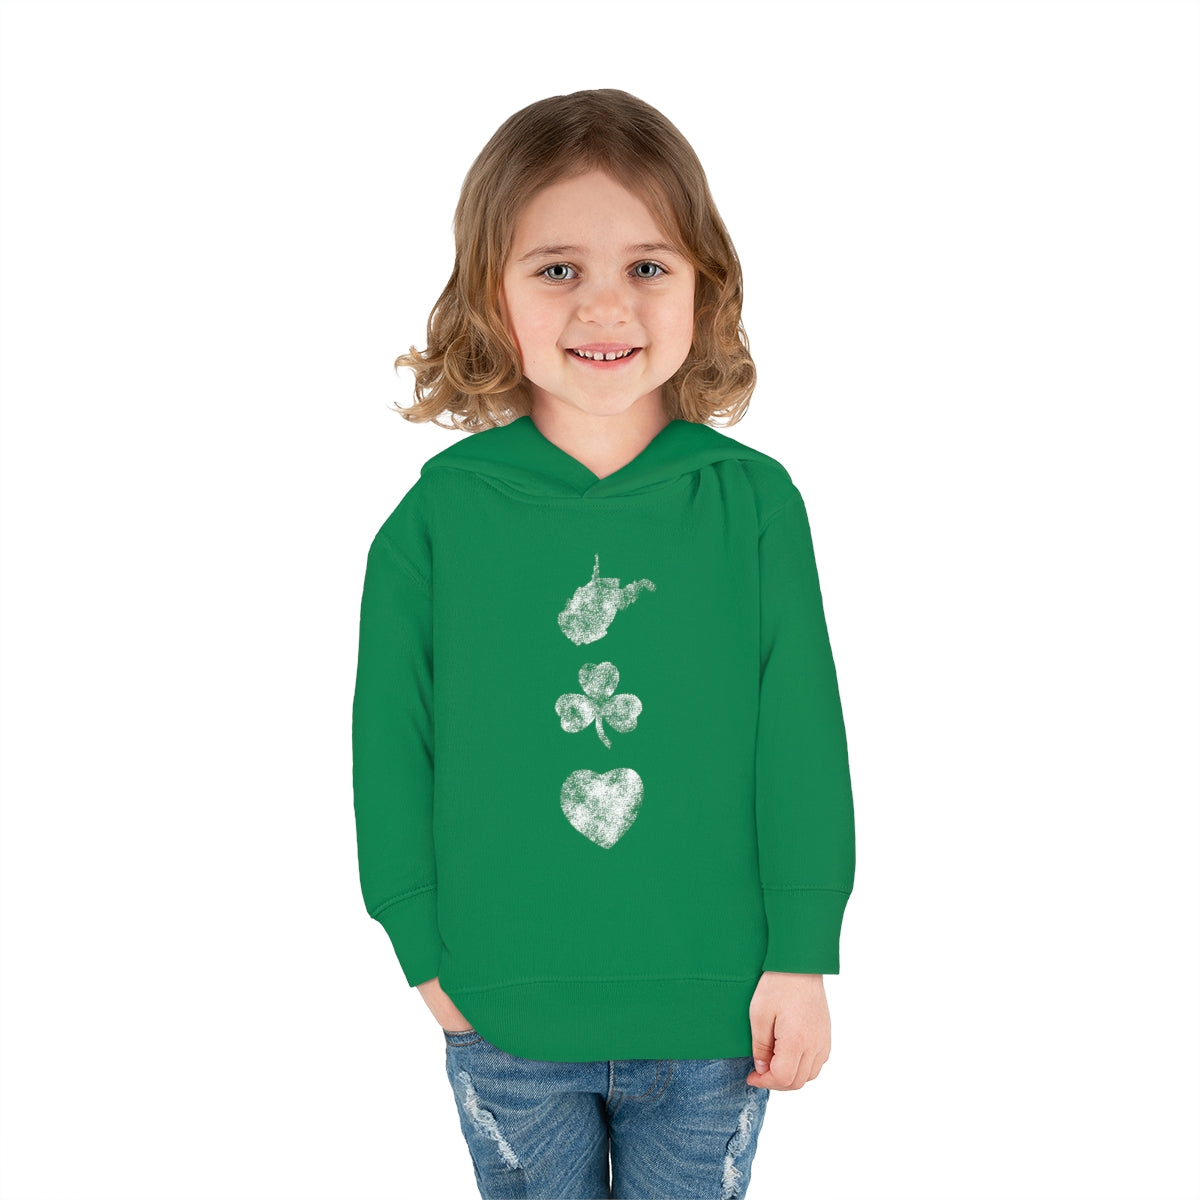 WV LOVE FOR COACH JOE-Toddler Pullover Fleece Hoodie